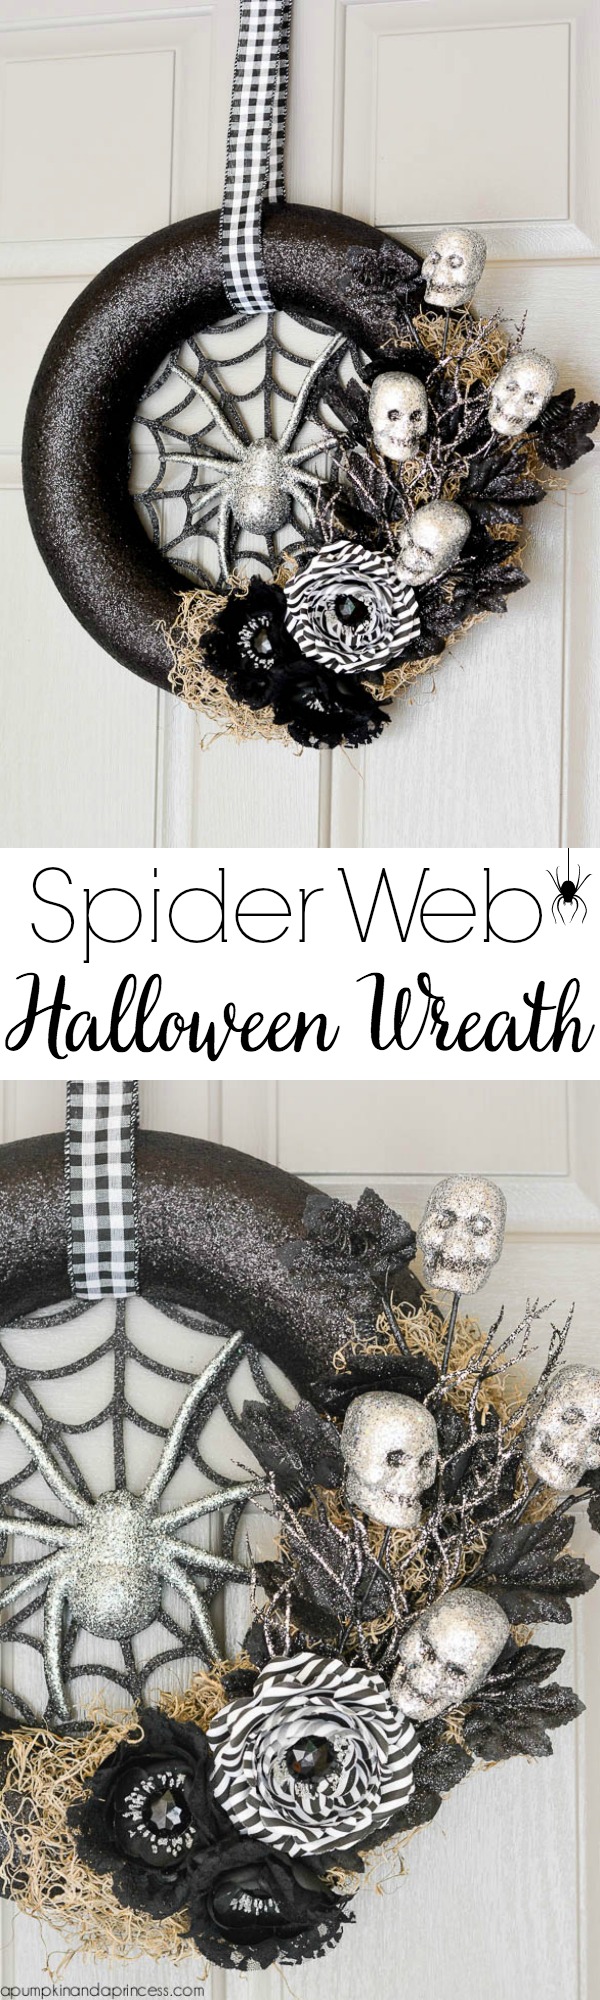 DIY Spider Web Halloween Wreath